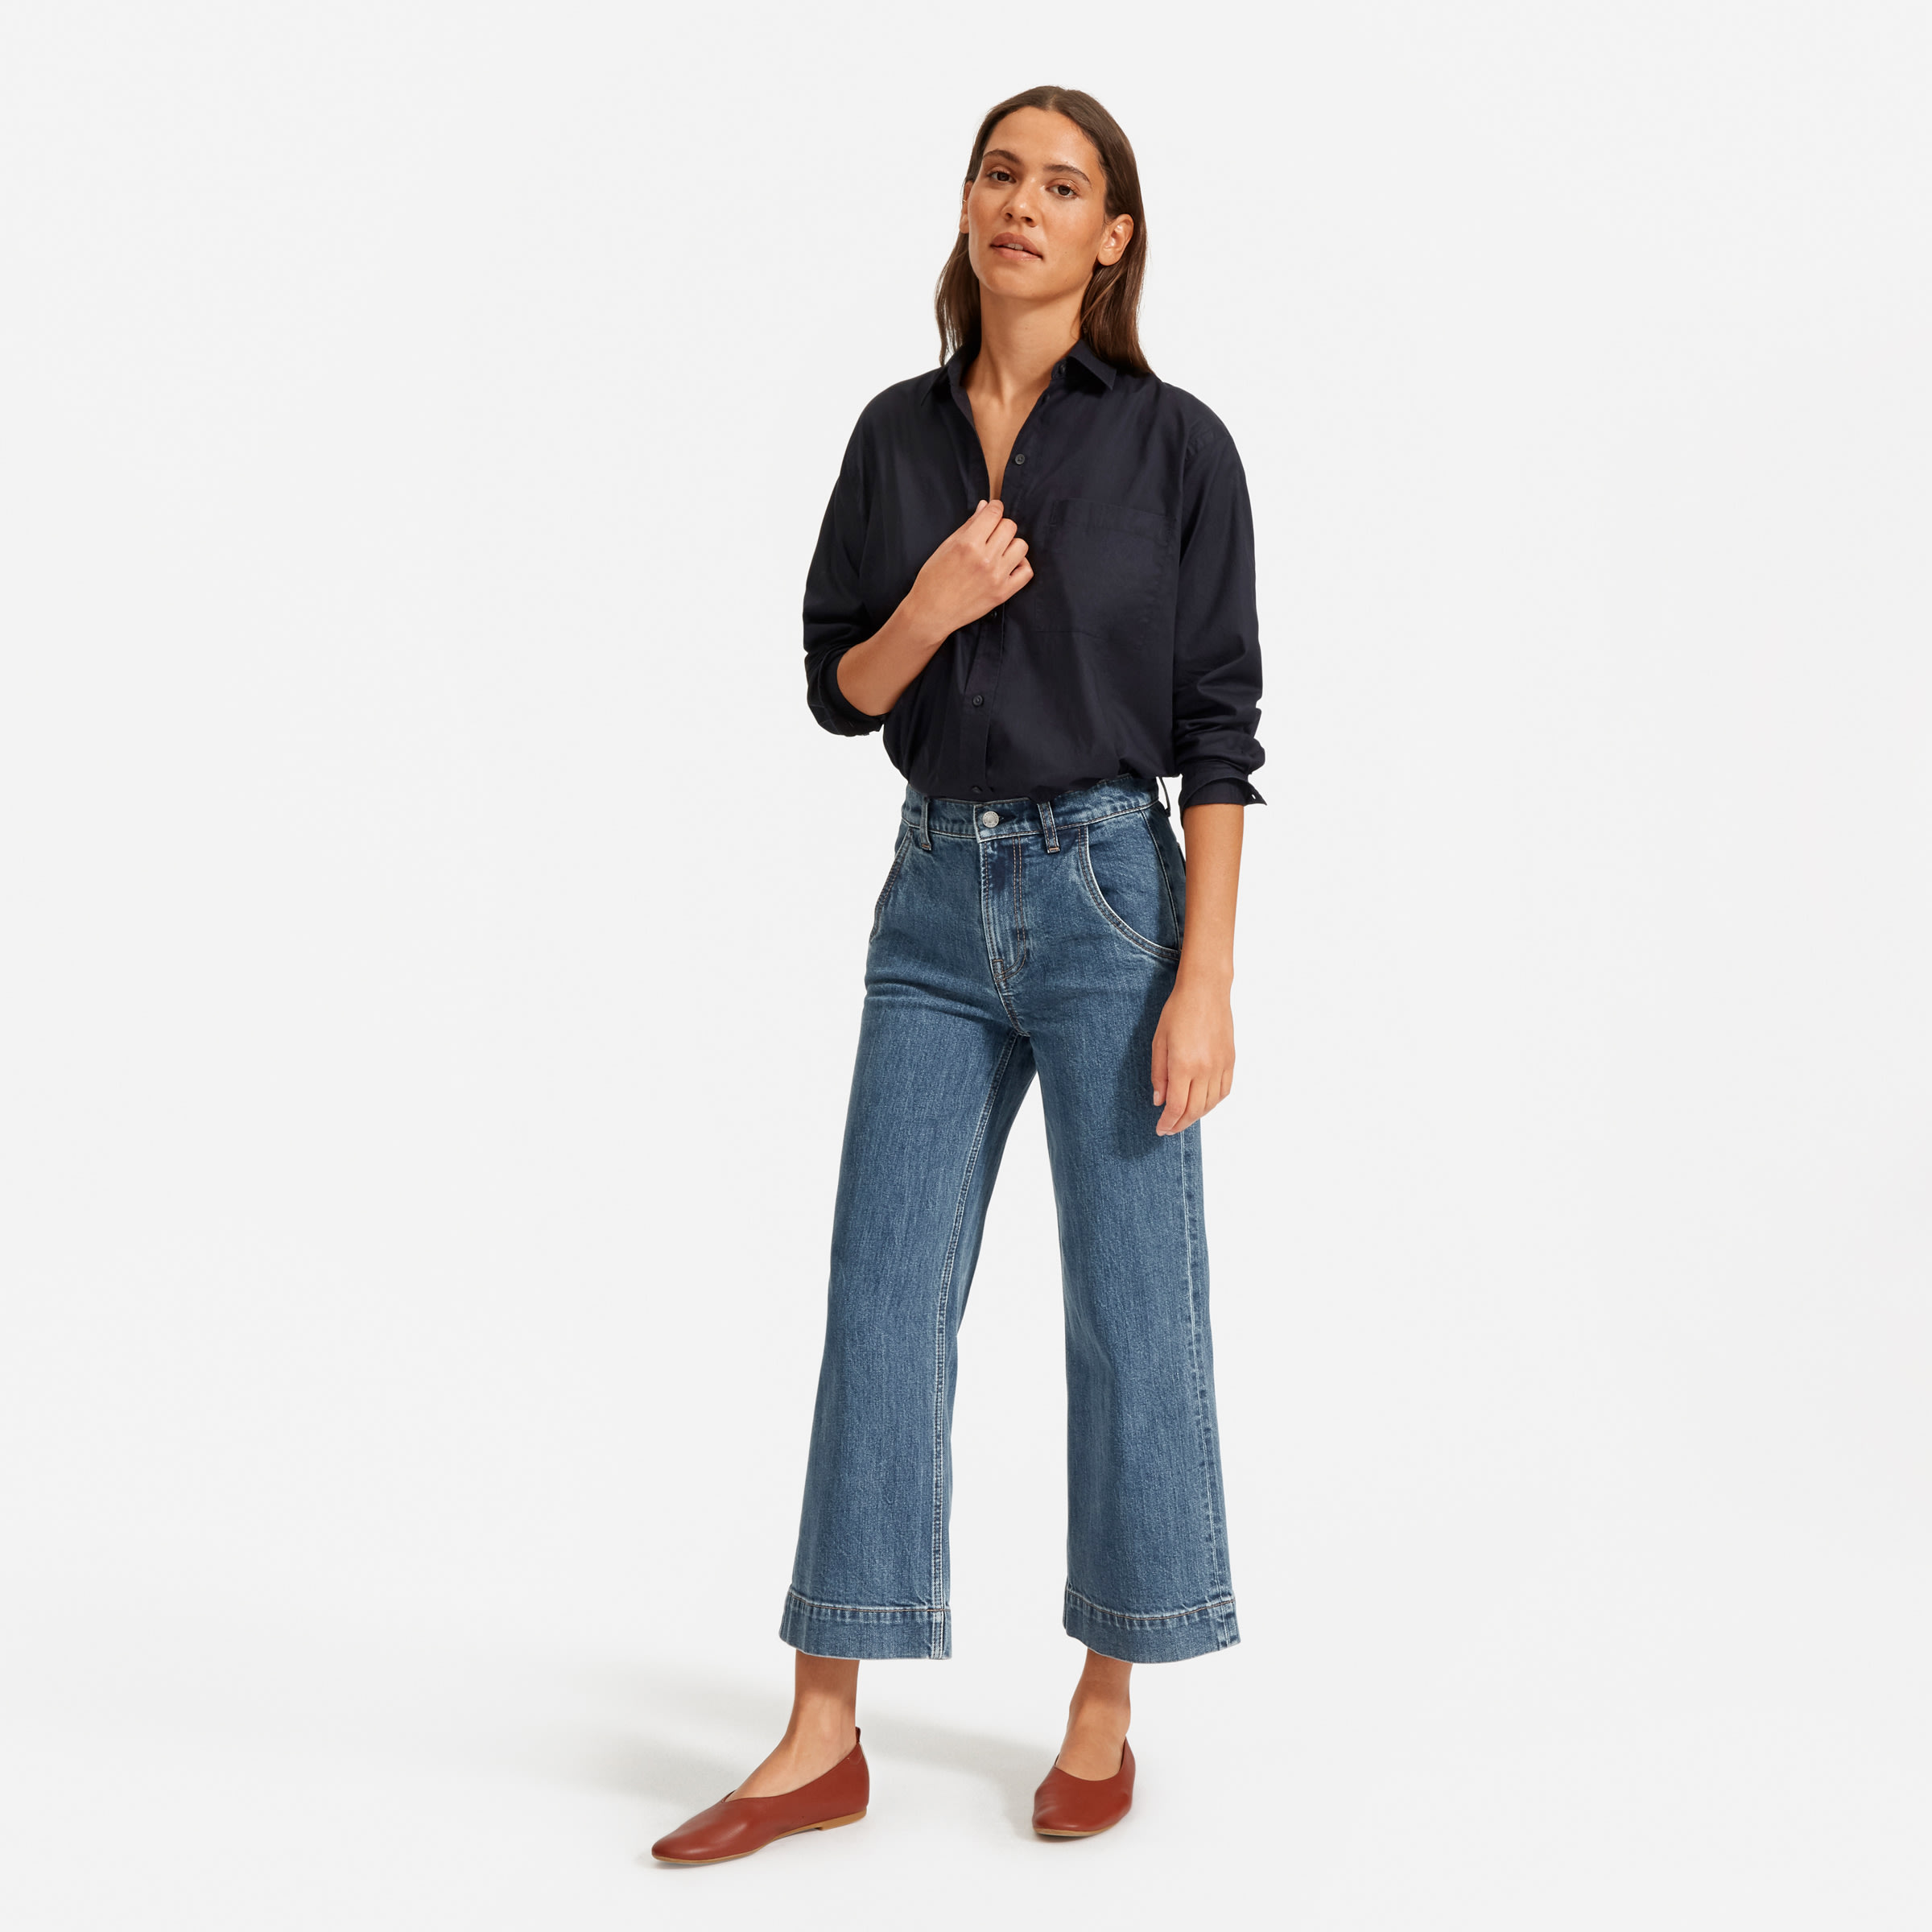 everlane-wide-leg-jeans - By Lauren M